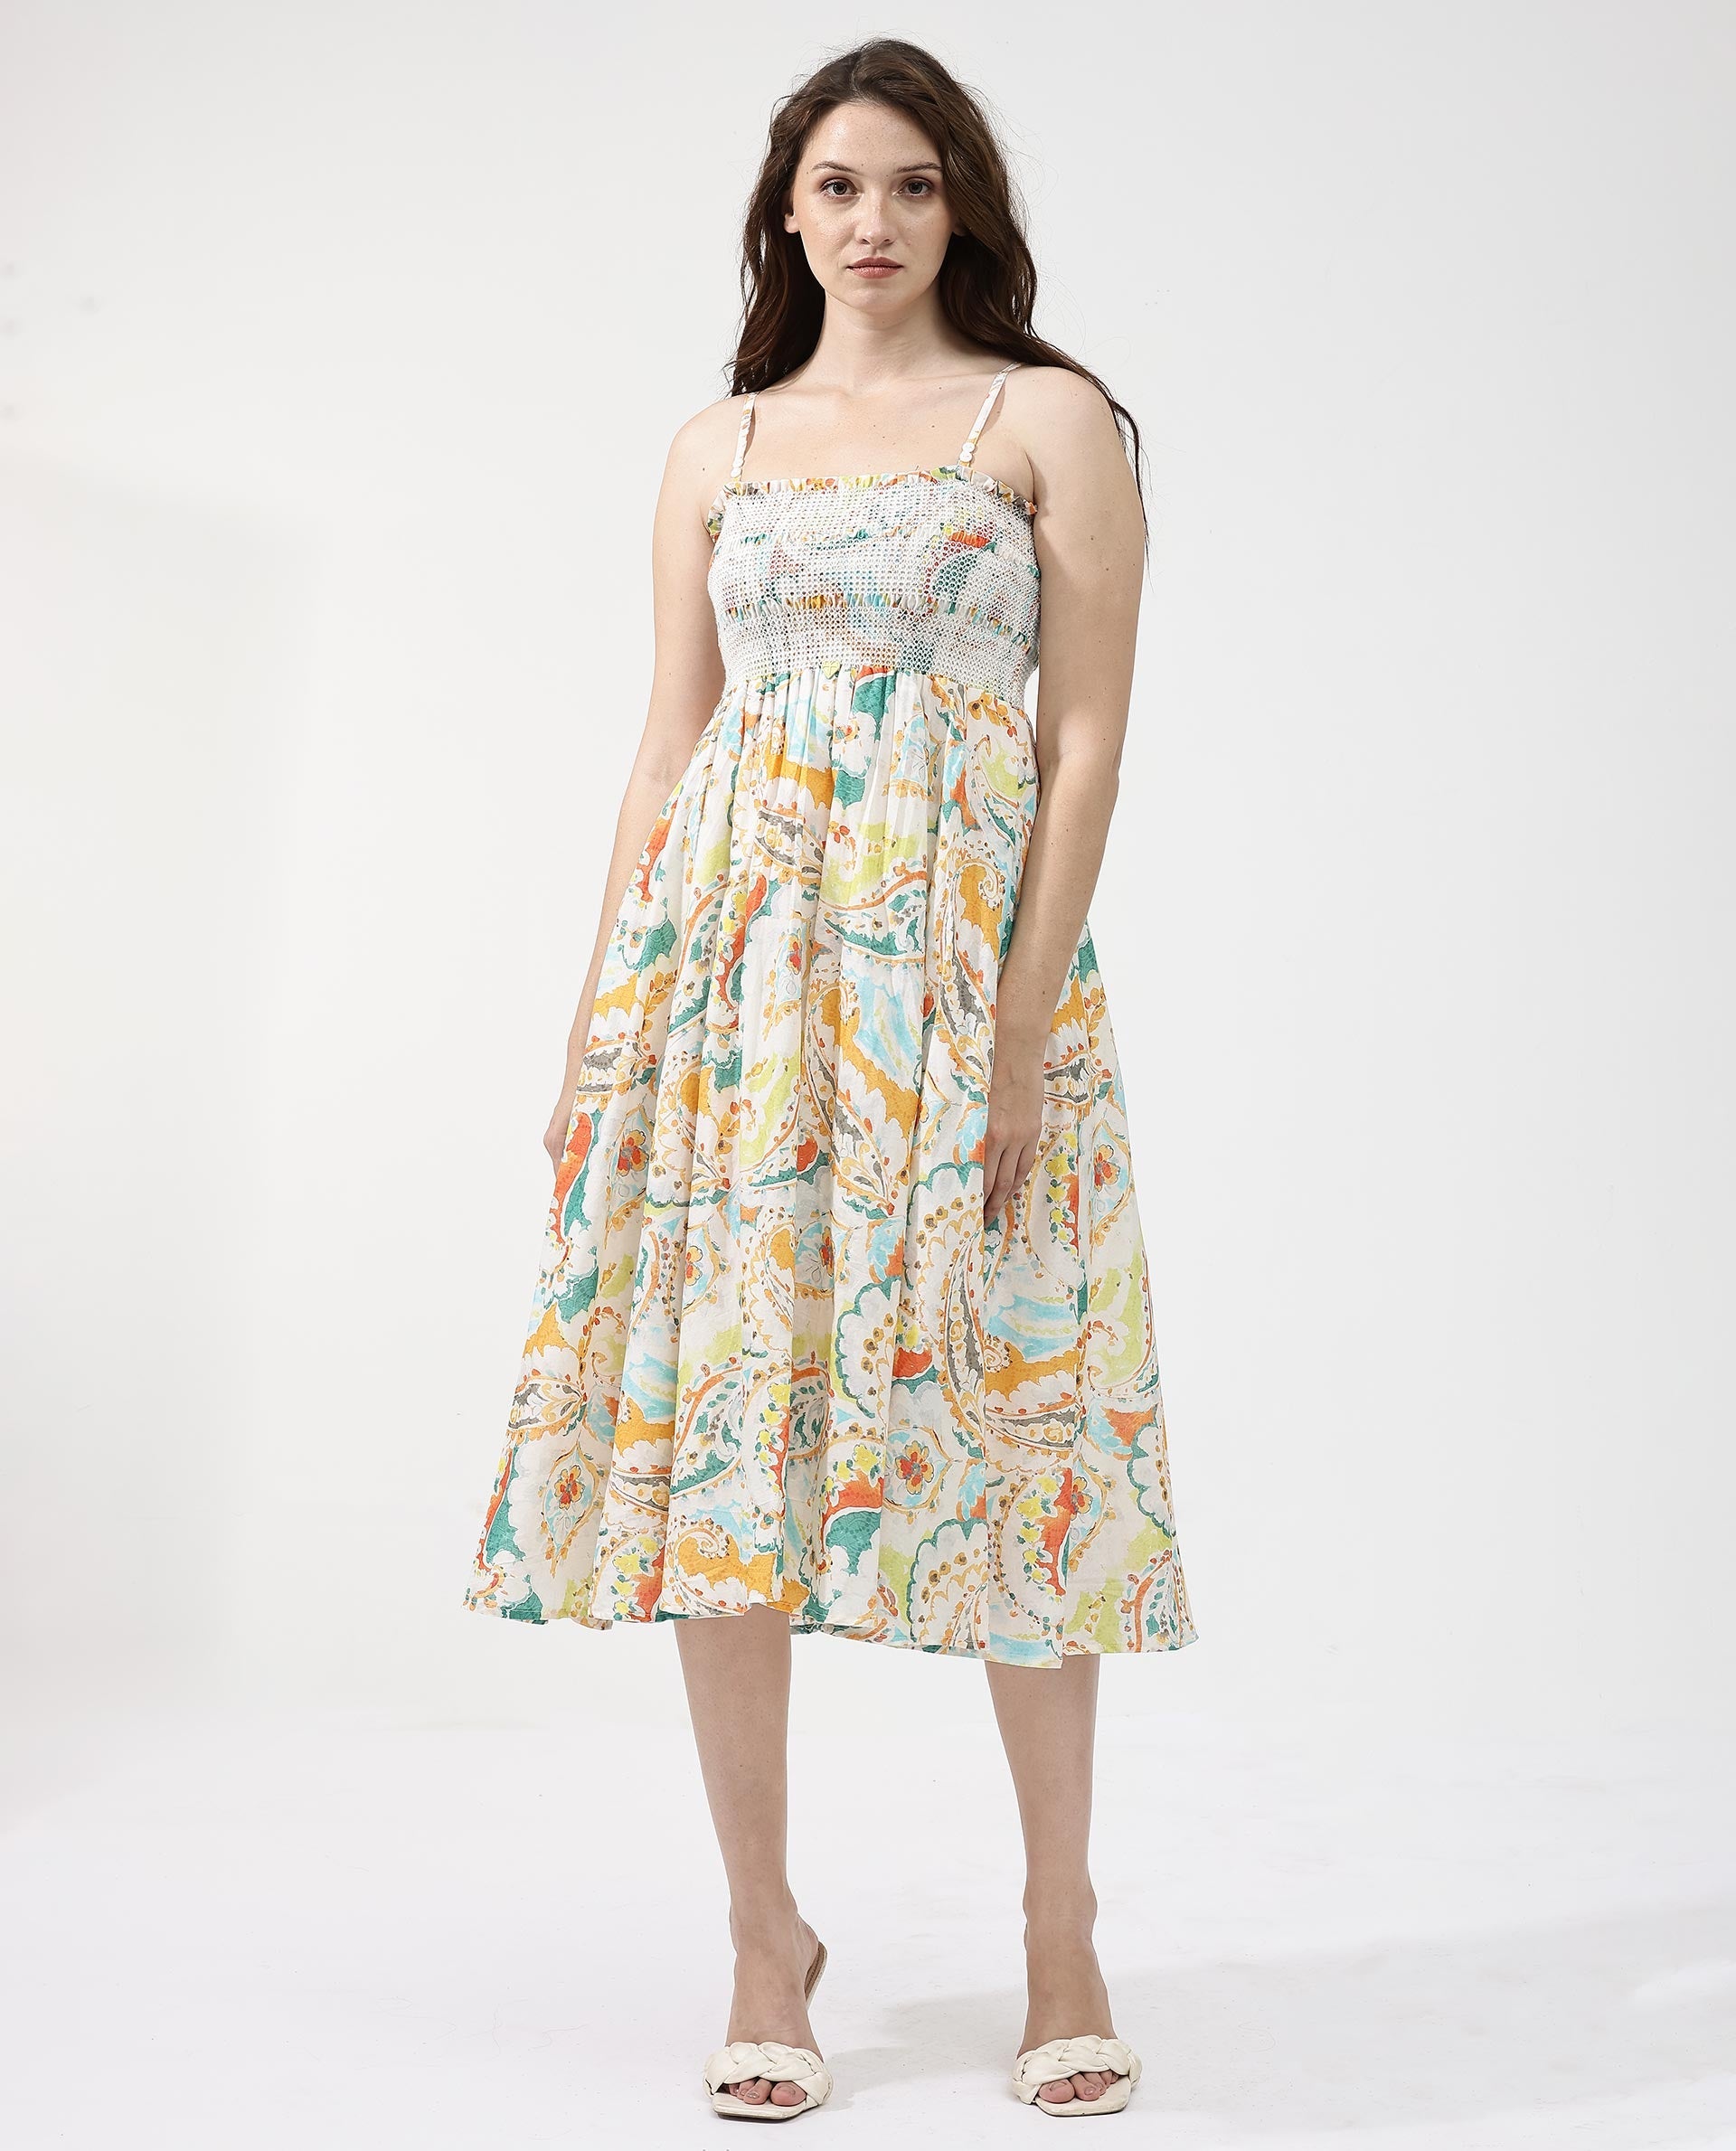 Rareism Women'S Bohemian Paisley Abstract Print Fit And Flare Midi Dress 